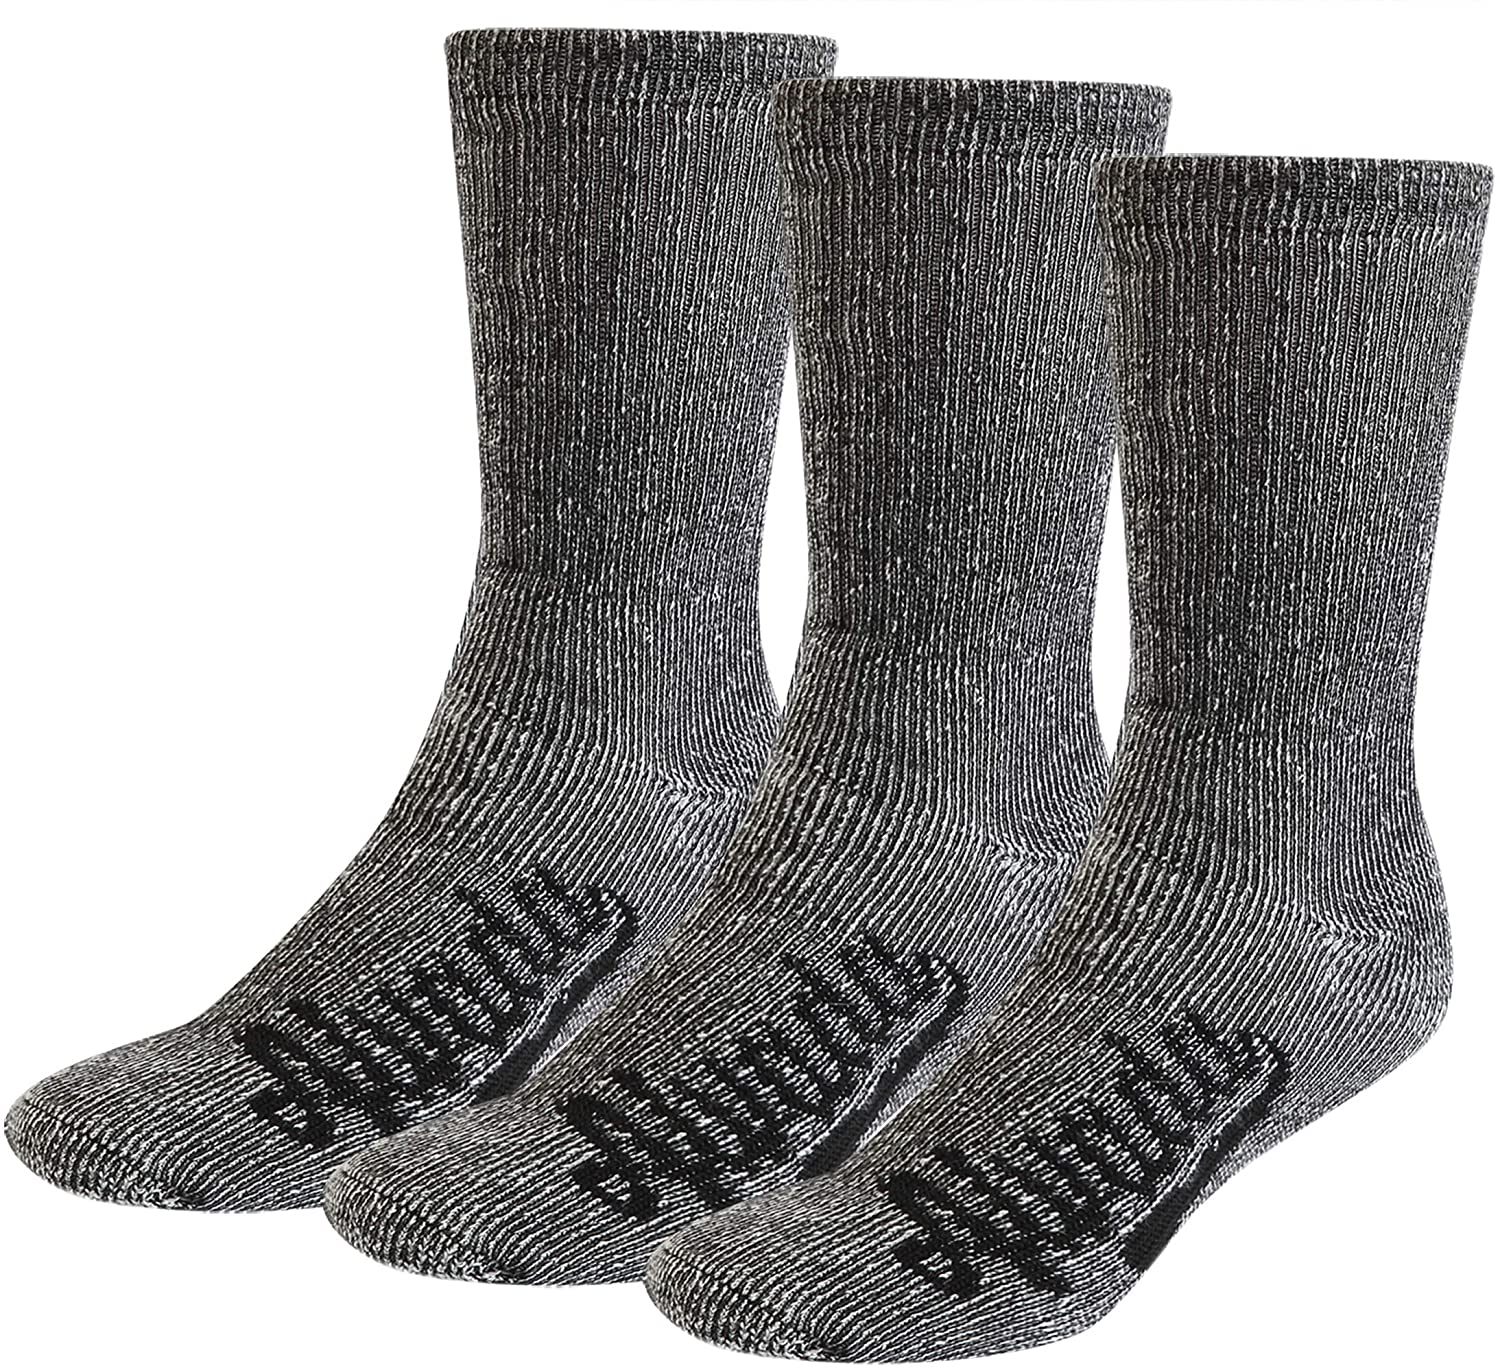 Mens 80% Merino Wool Hiking Calf Tube Socks Thermal Warm Crew Winter Sock for Trekking Walking Outdoor,3 Pairs